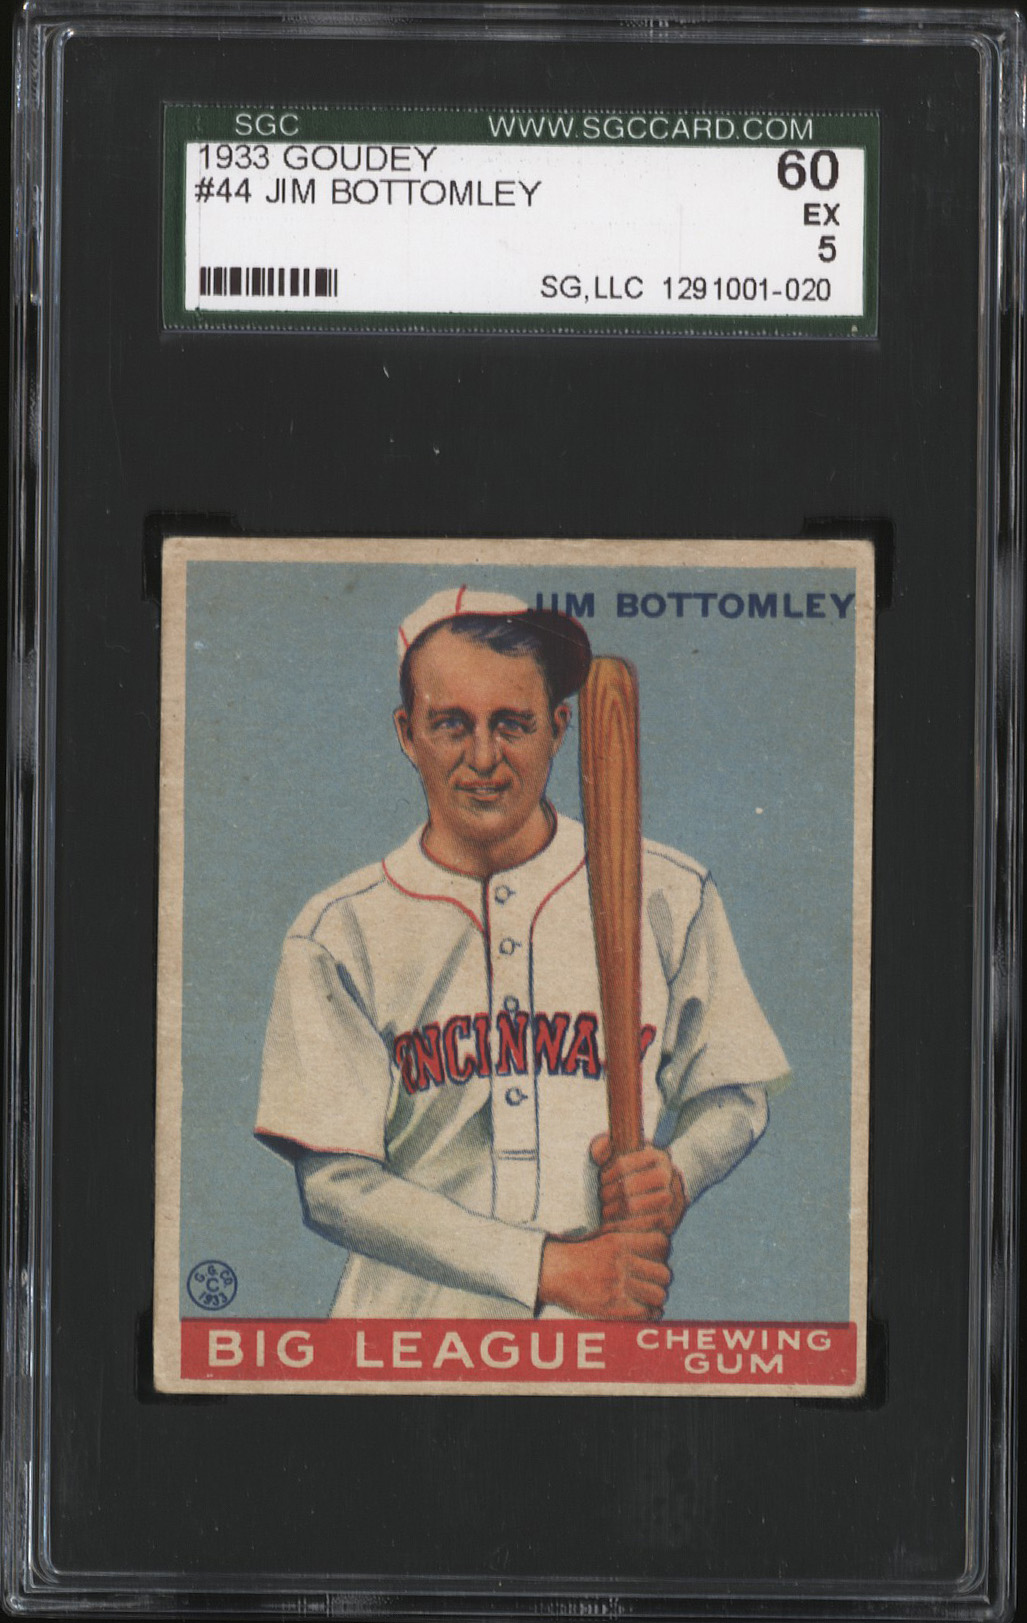  1933 Goudey #44 Jim Bottomley (HOF) - SGC EX 5